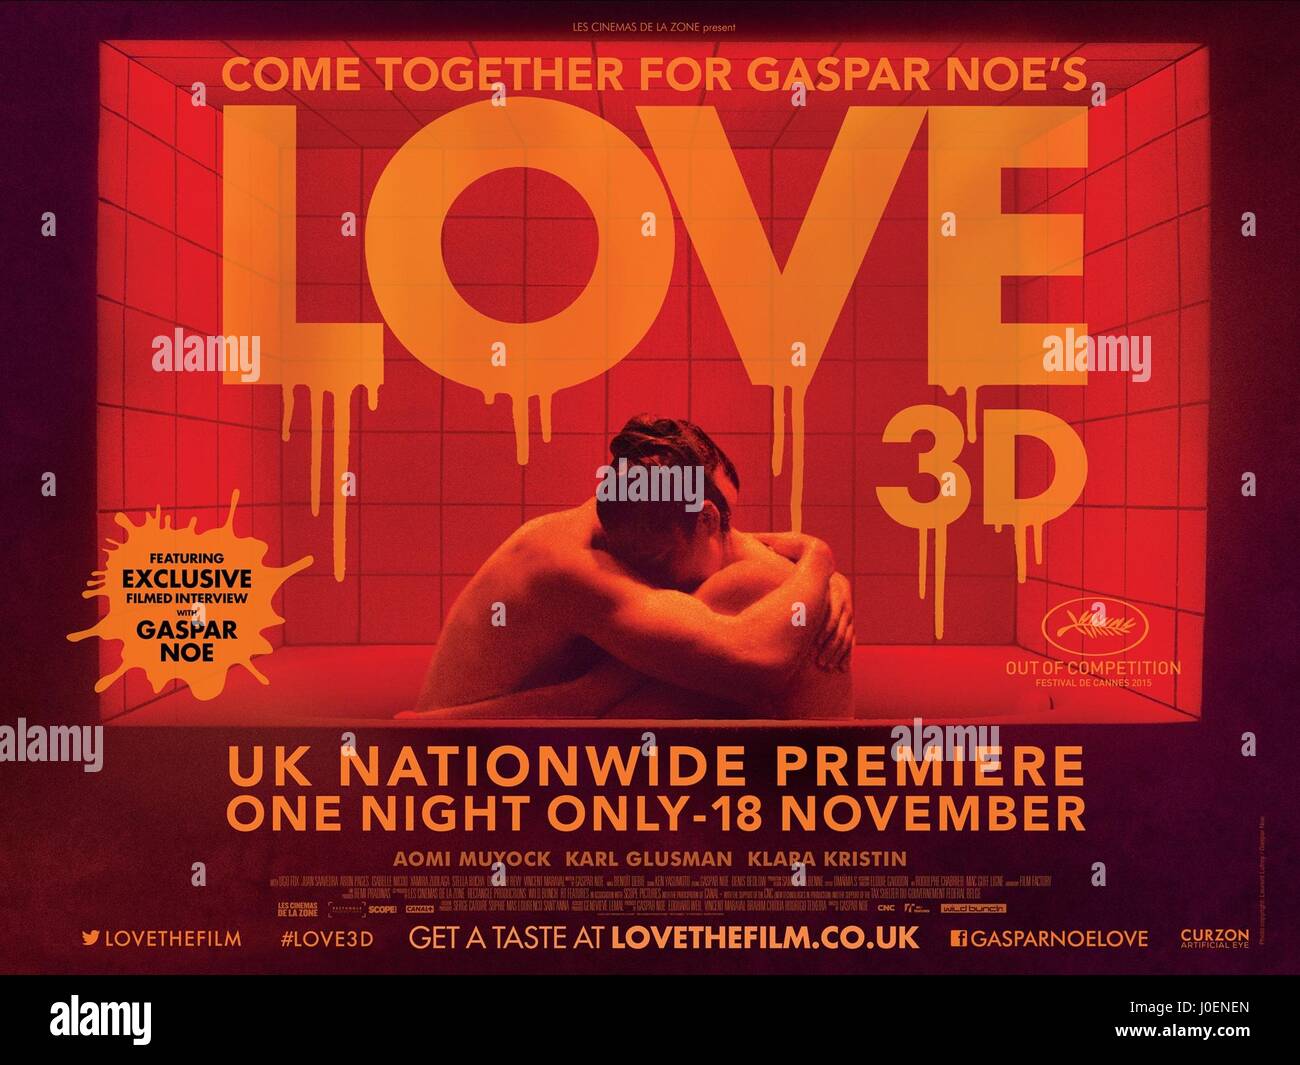 Gaspar noe love free movie online